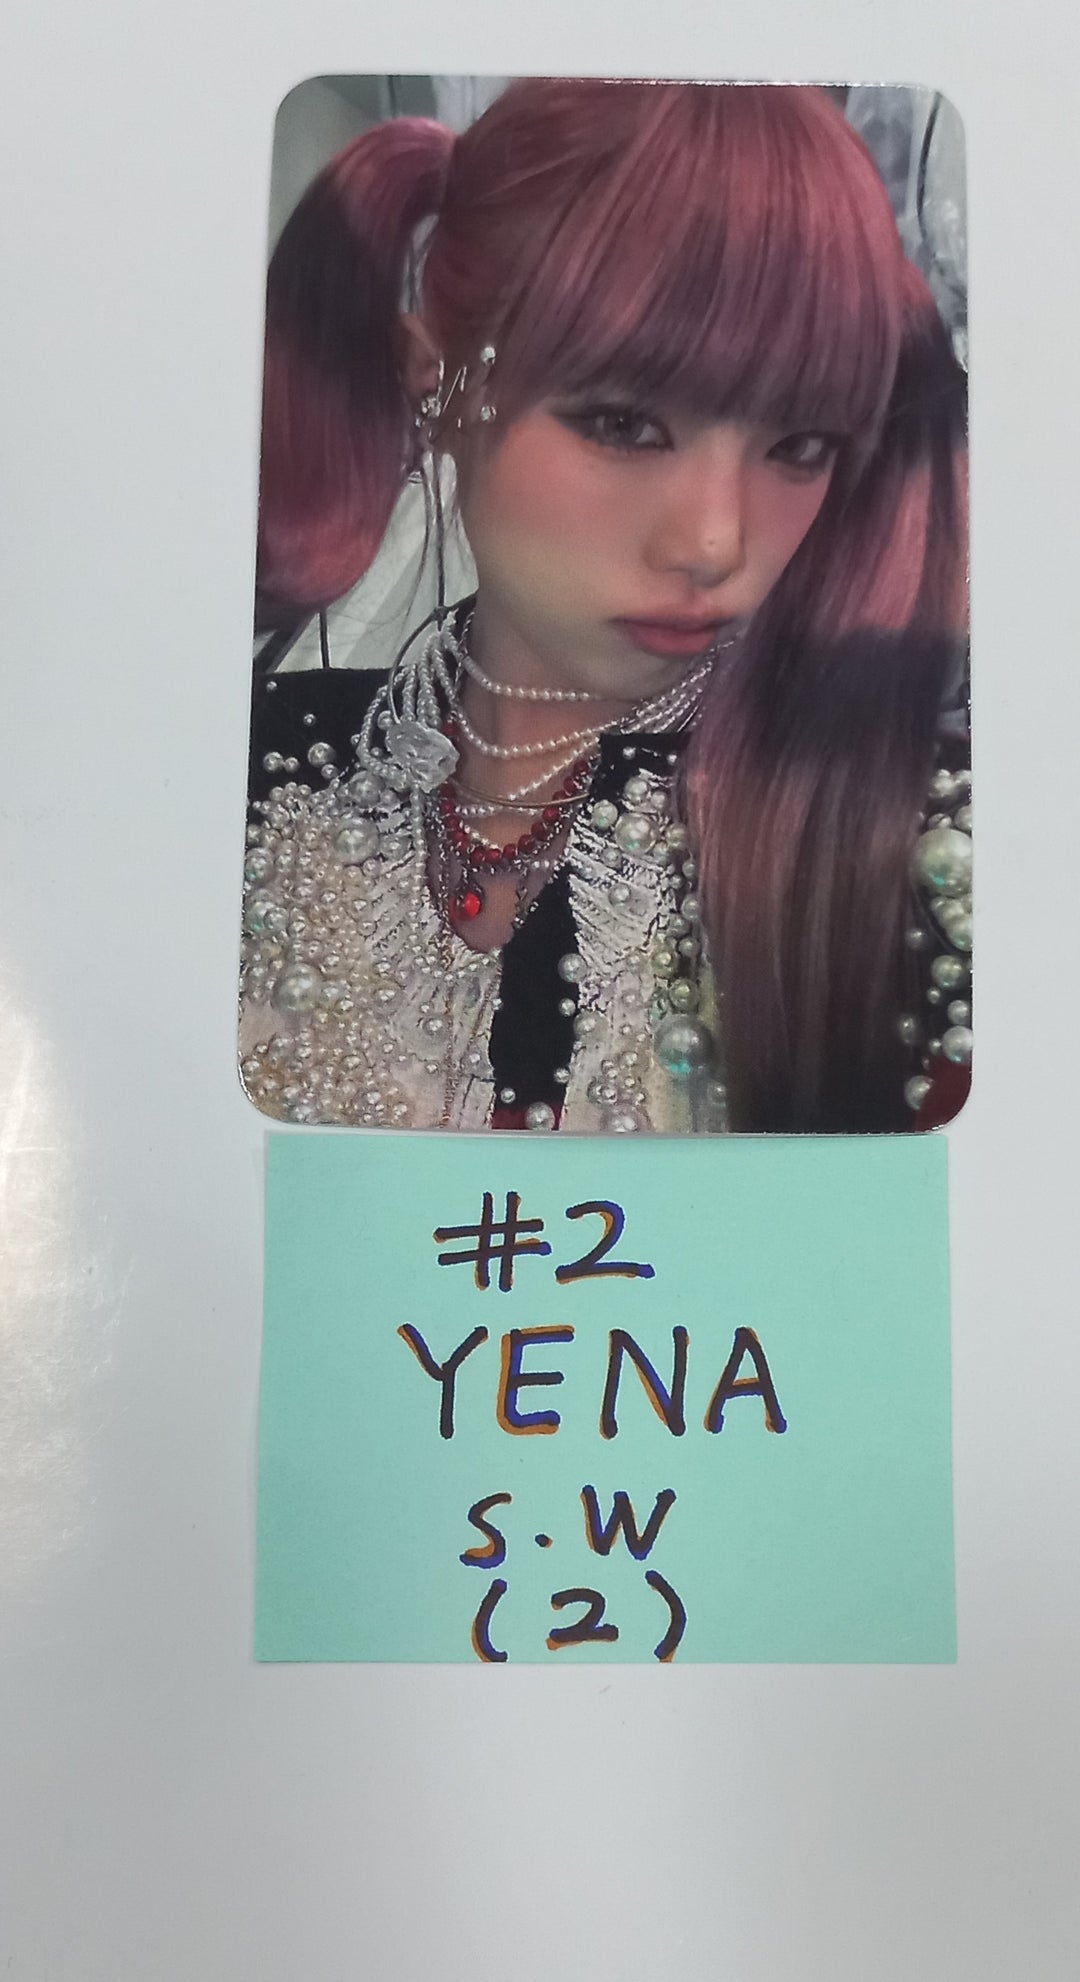 YENA "Good Morning" - Soundwave Pre-Order Benefit Photocard [24.1.18]